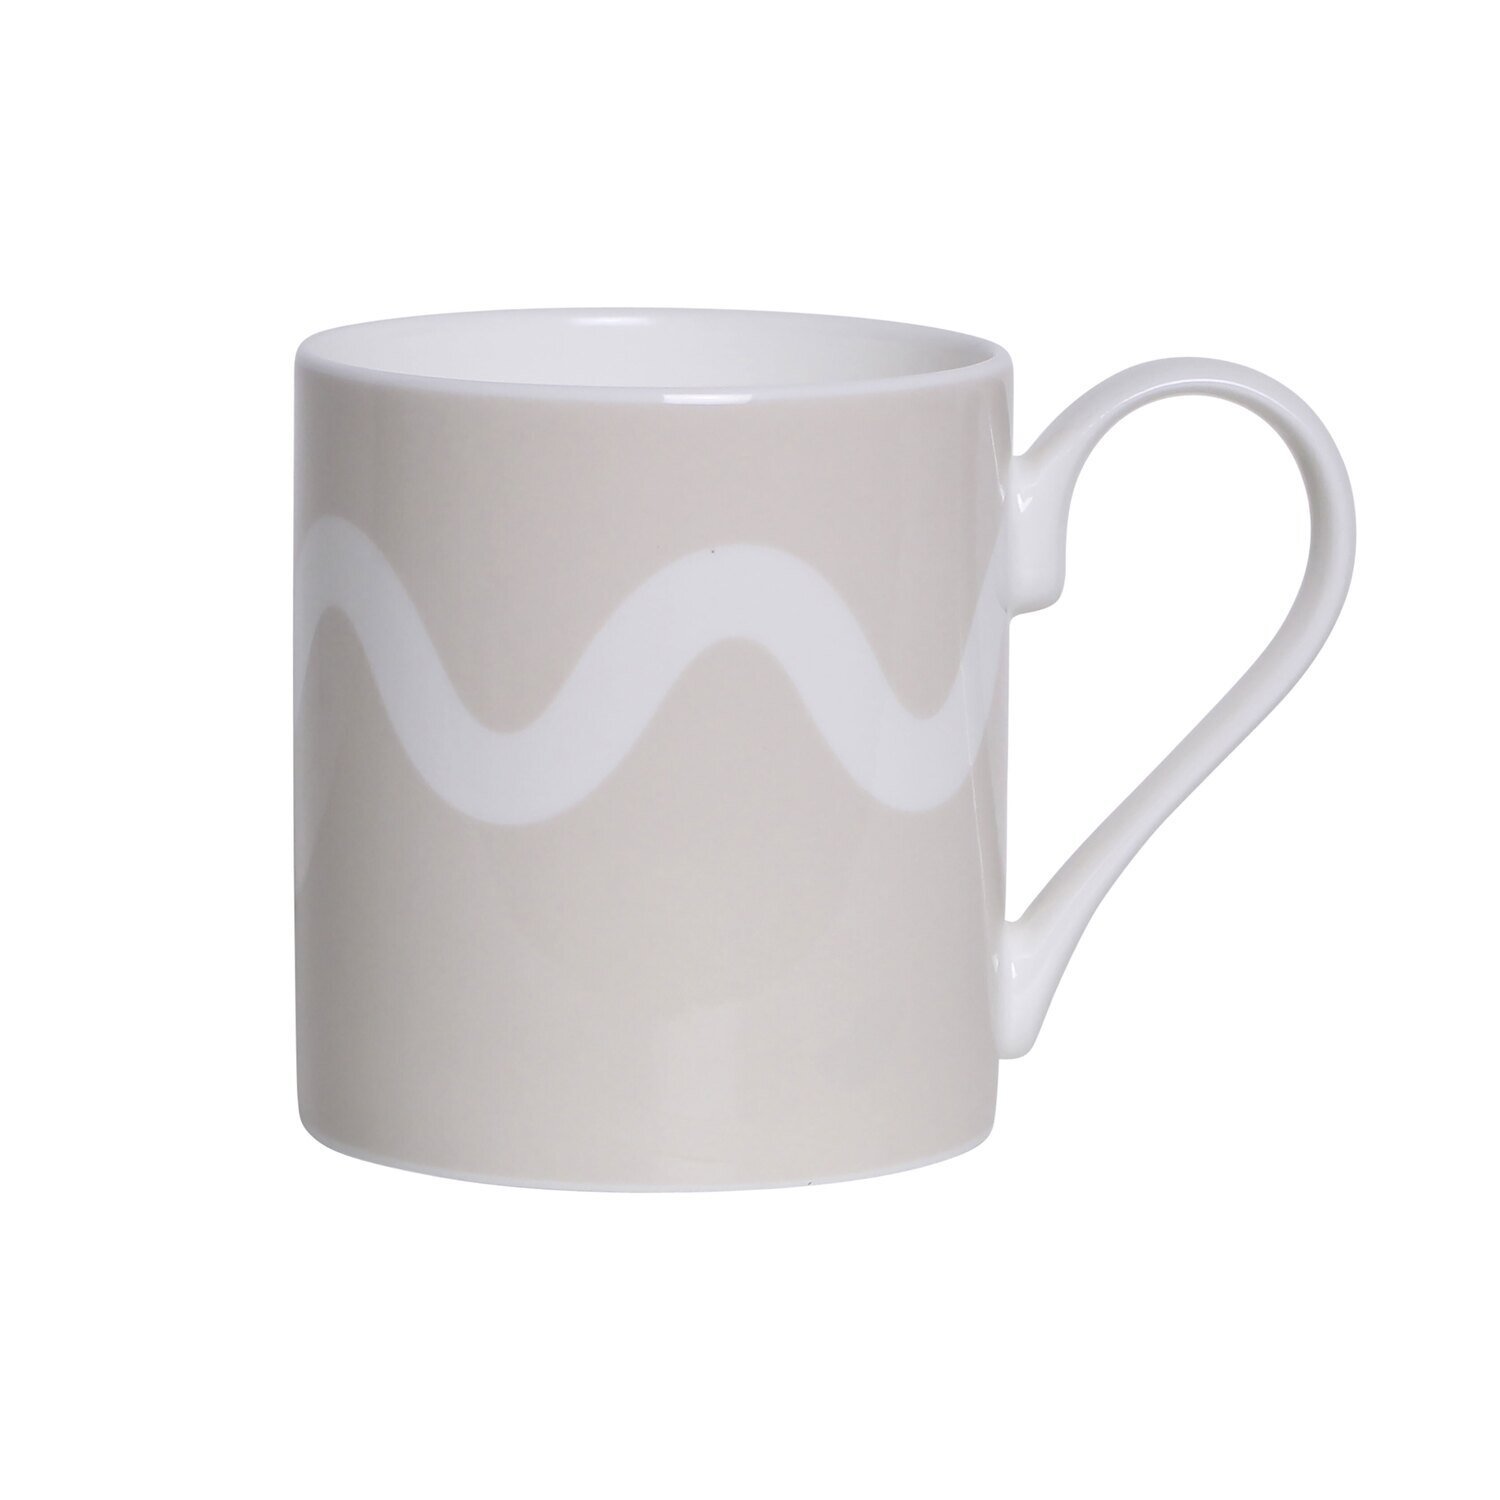 Addison Ross Cappuccino Squiggle Fine China Mug 3 x 3.5 Inch Ceramic MUG012